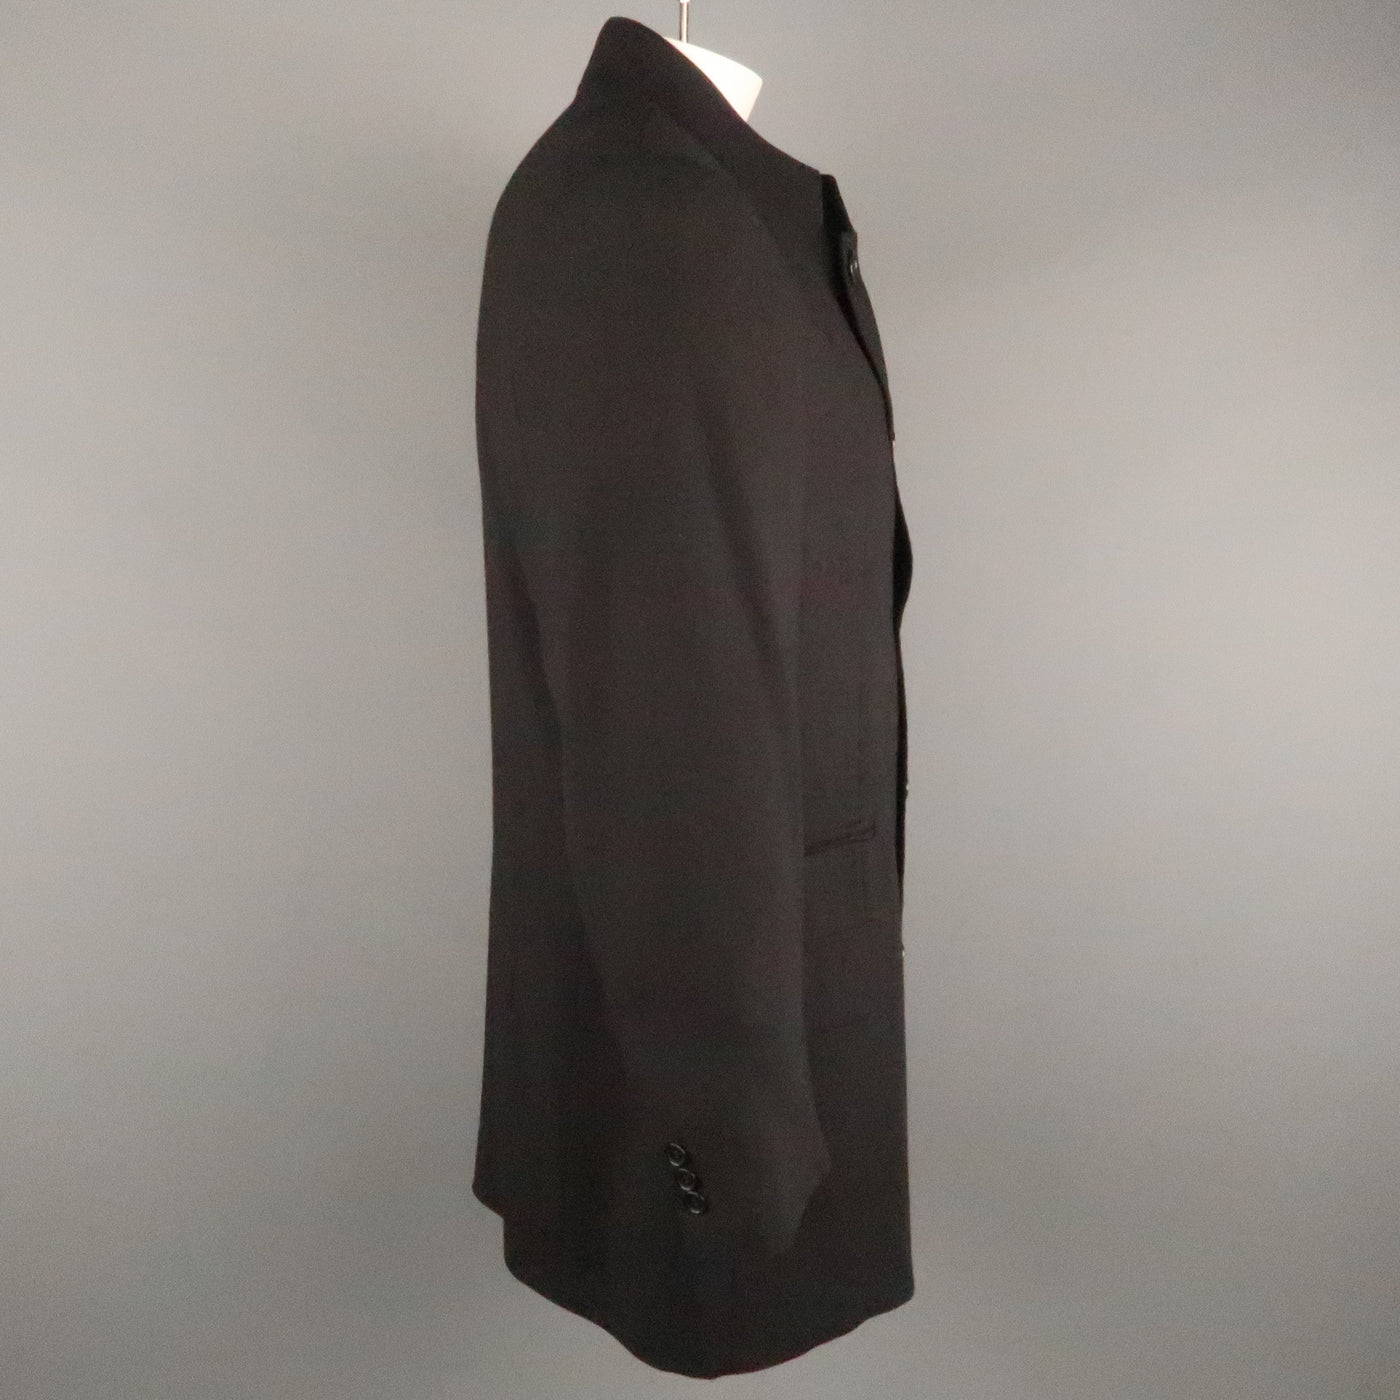 MONDO DI MARCO Chest Size 42 Long Black Solid Wool Nehru Collar Sport Coat